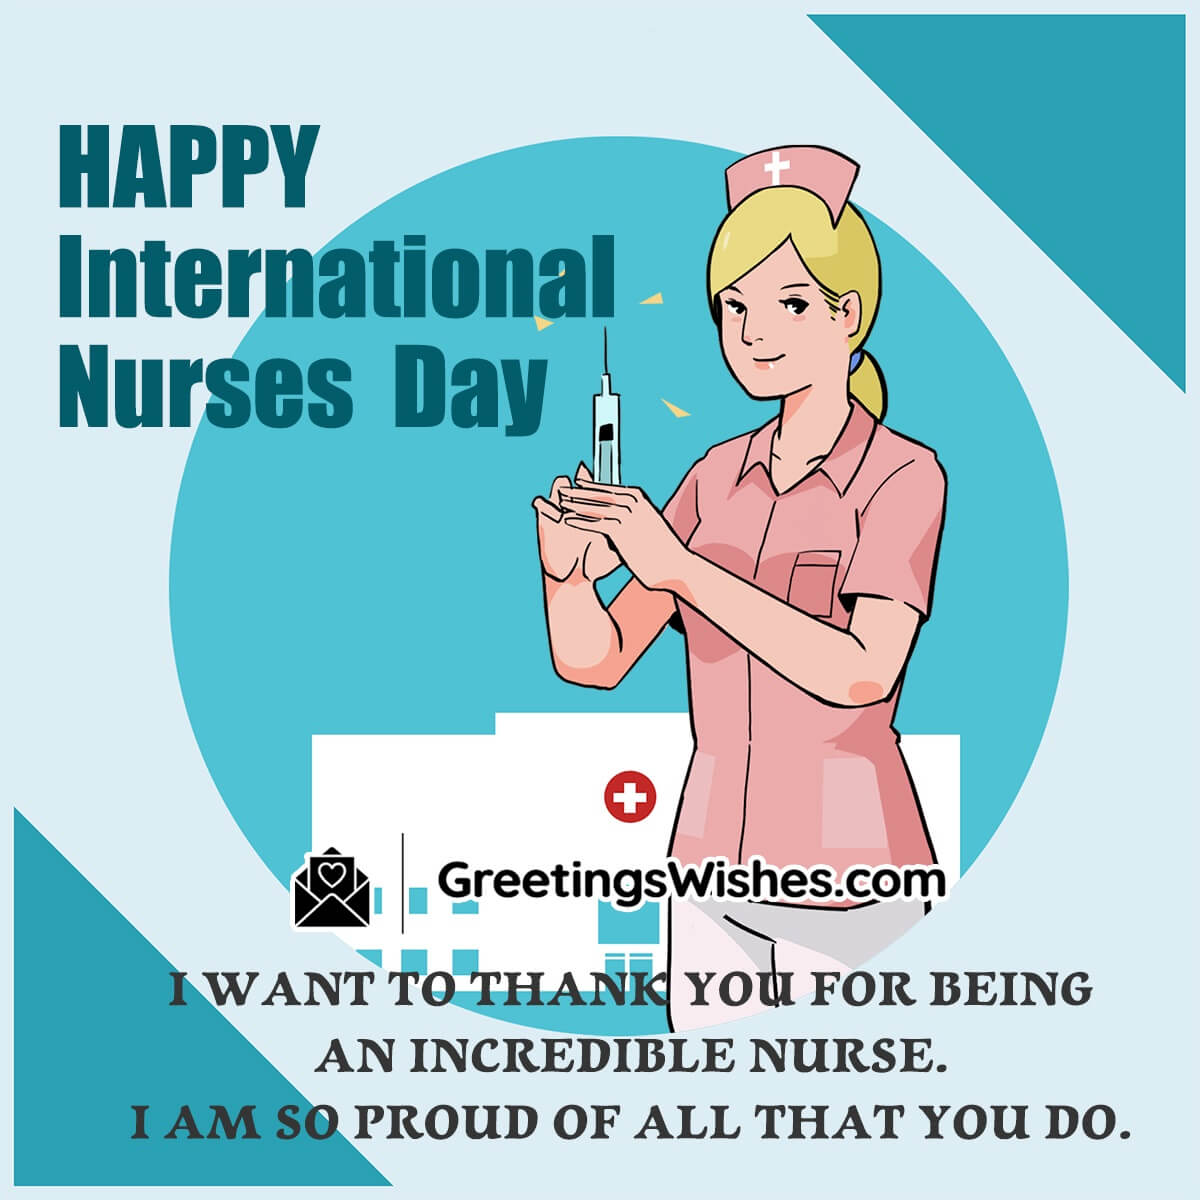 Happy International Nurses Day Message